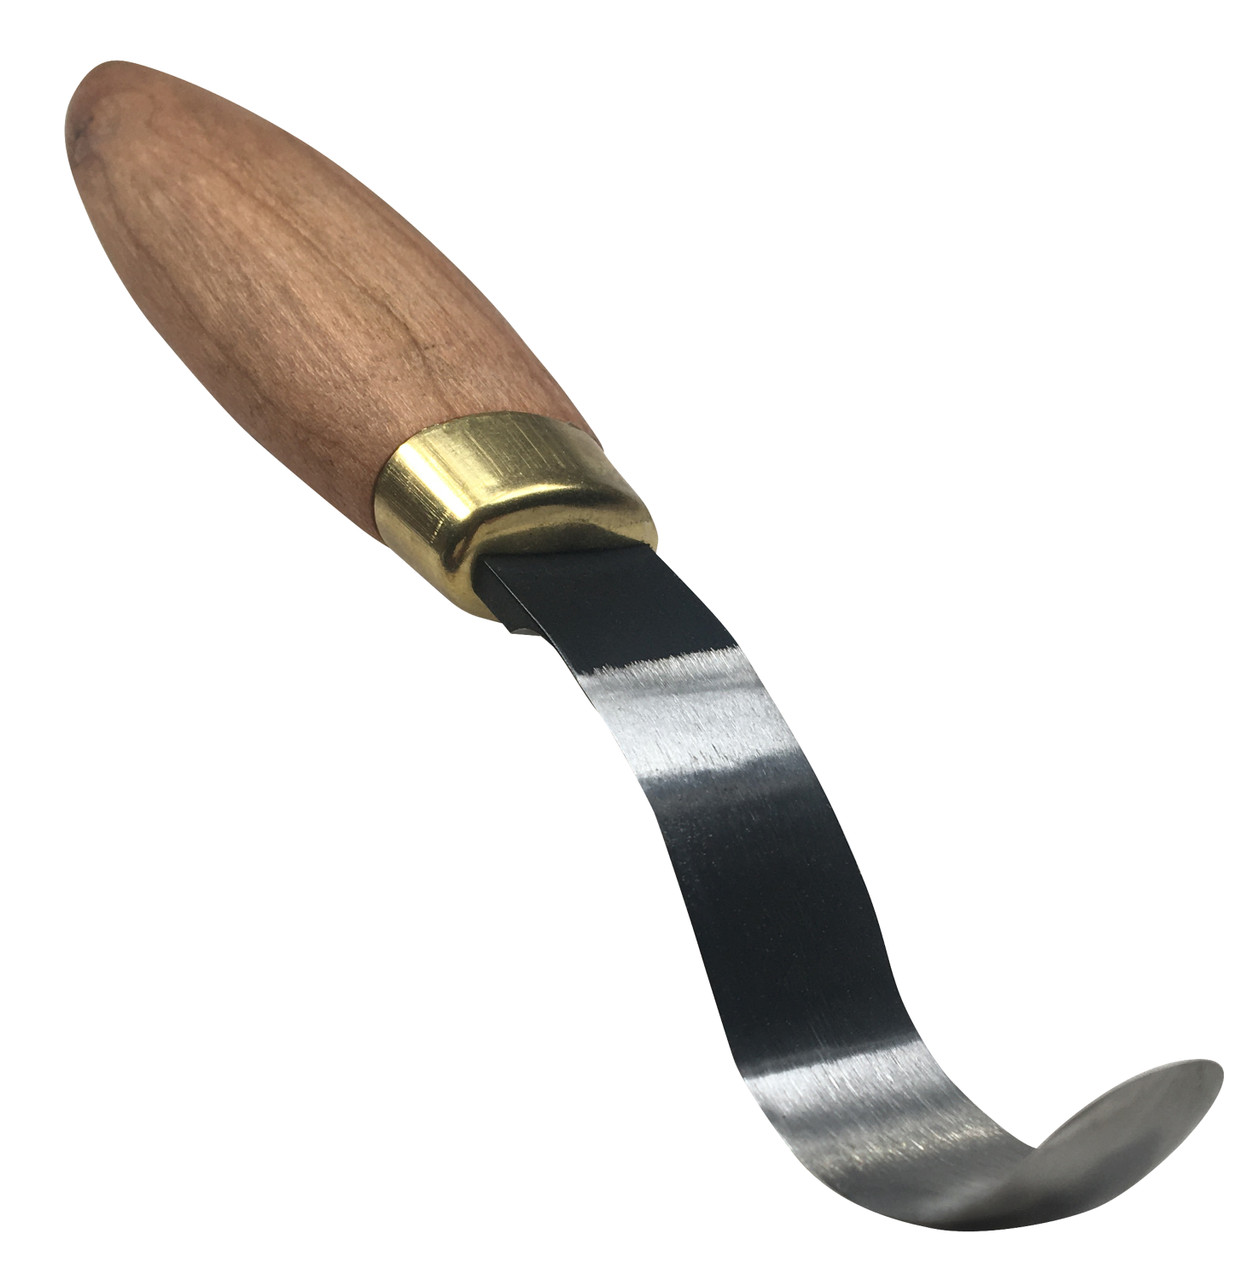 Flexcut Sloyd Knife Hummul Carving Company